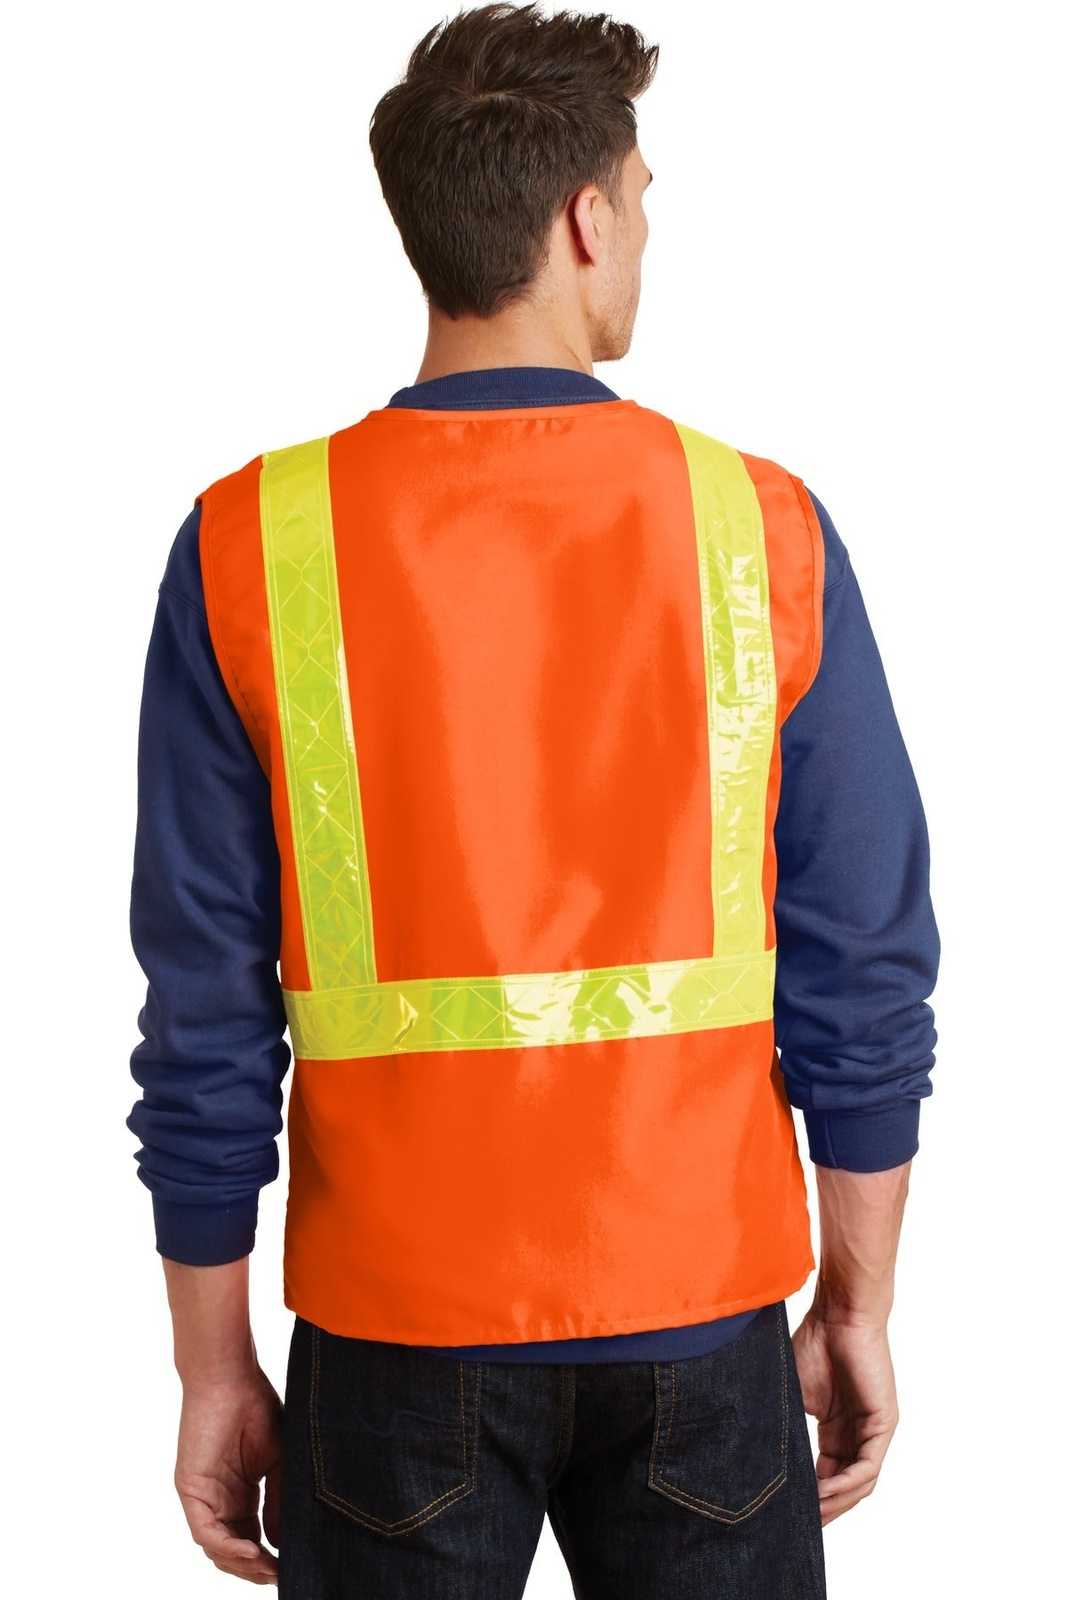 Port Authority SV01 Enhanced Visibility Vest - Safety Orange Reflective - HIT a Double - 1